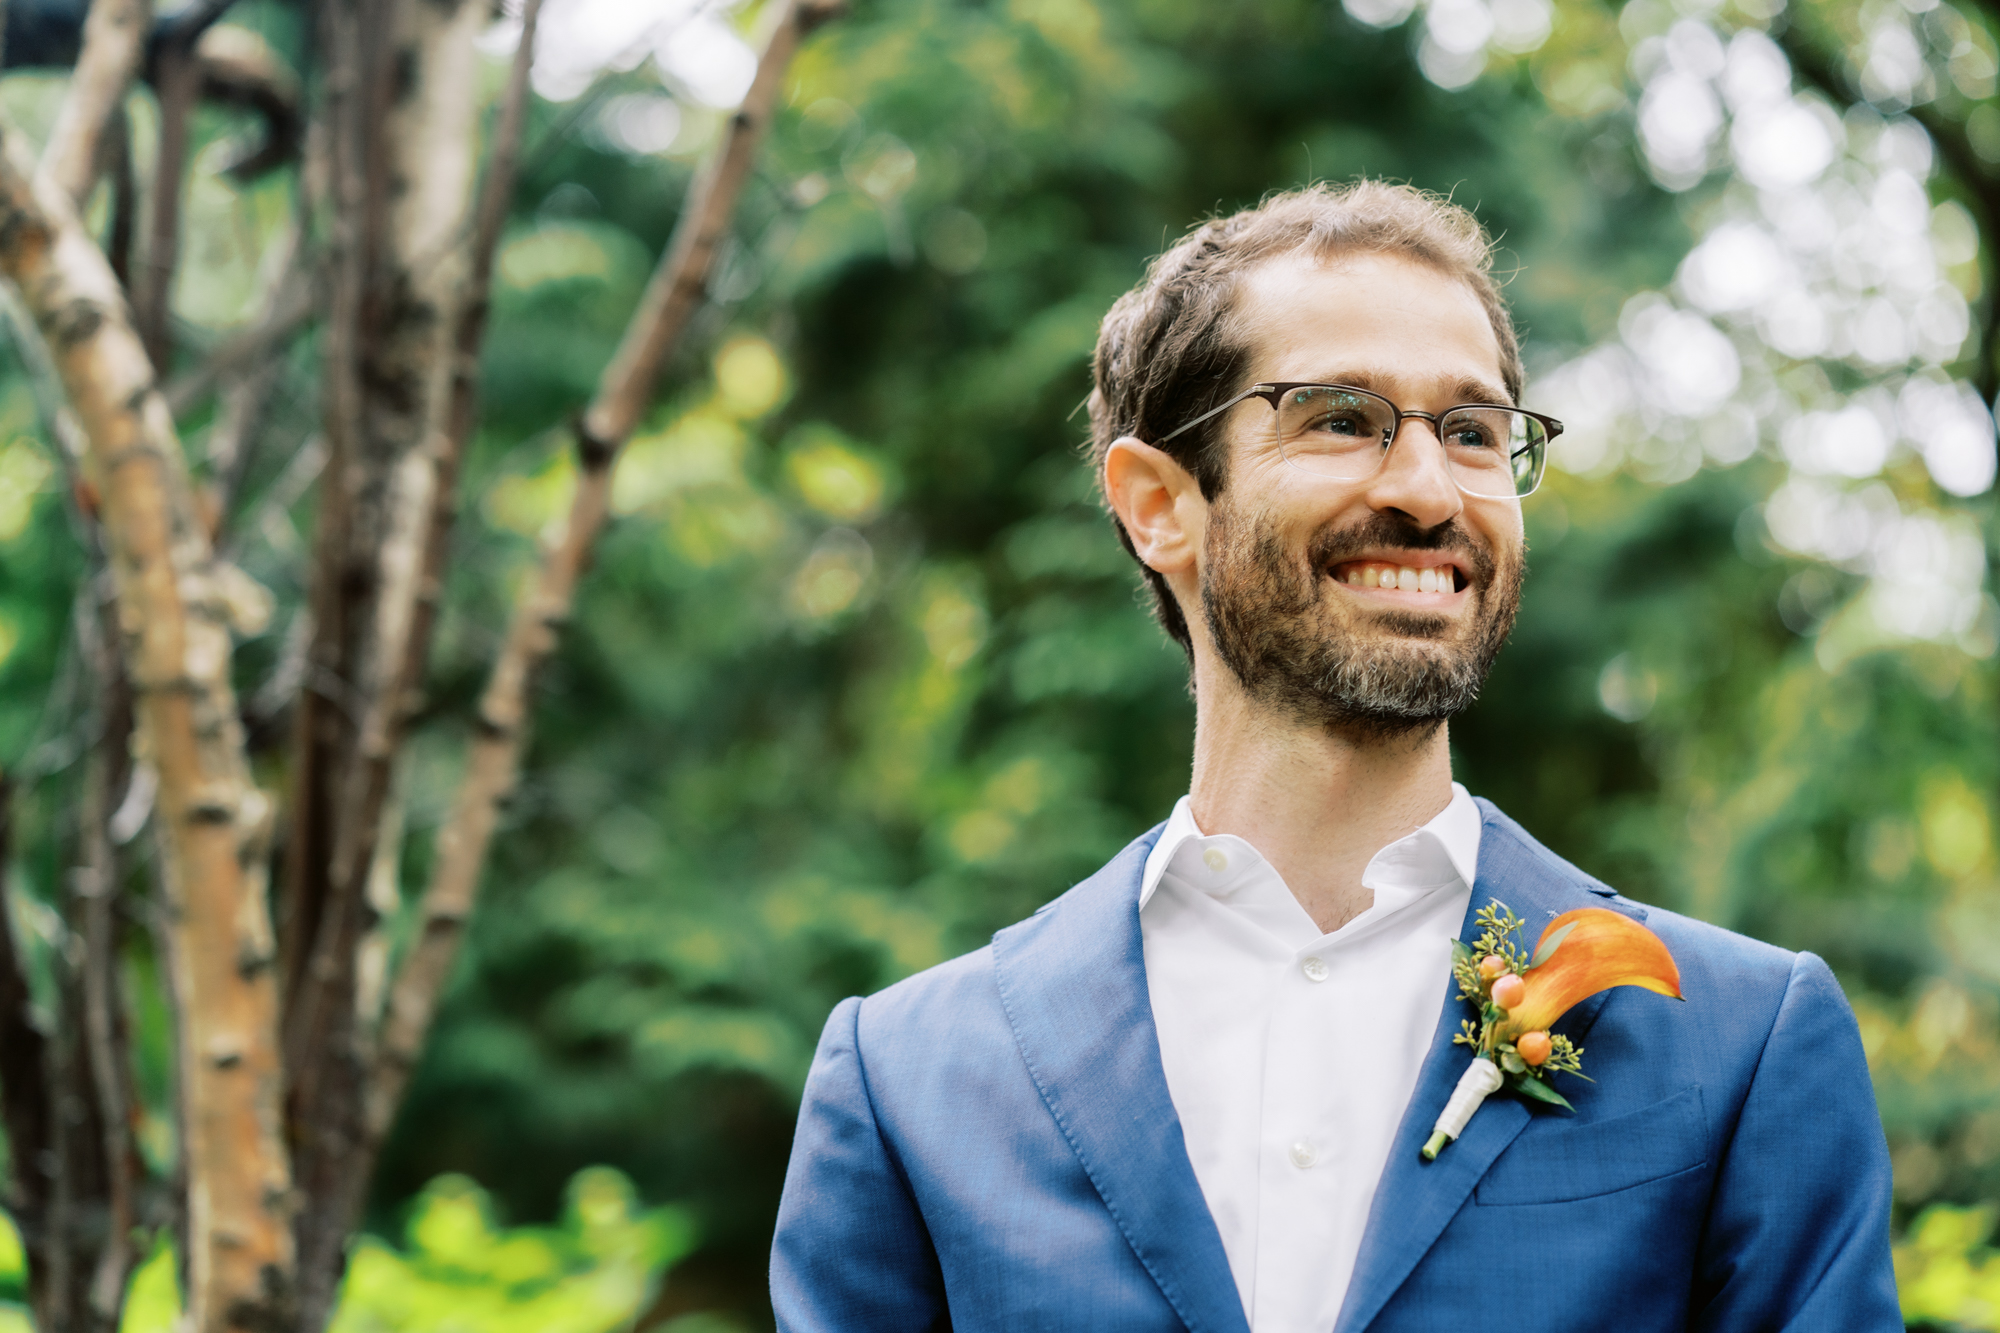 Seattle wedding photographer: Scott watches his bride walk down the aisle